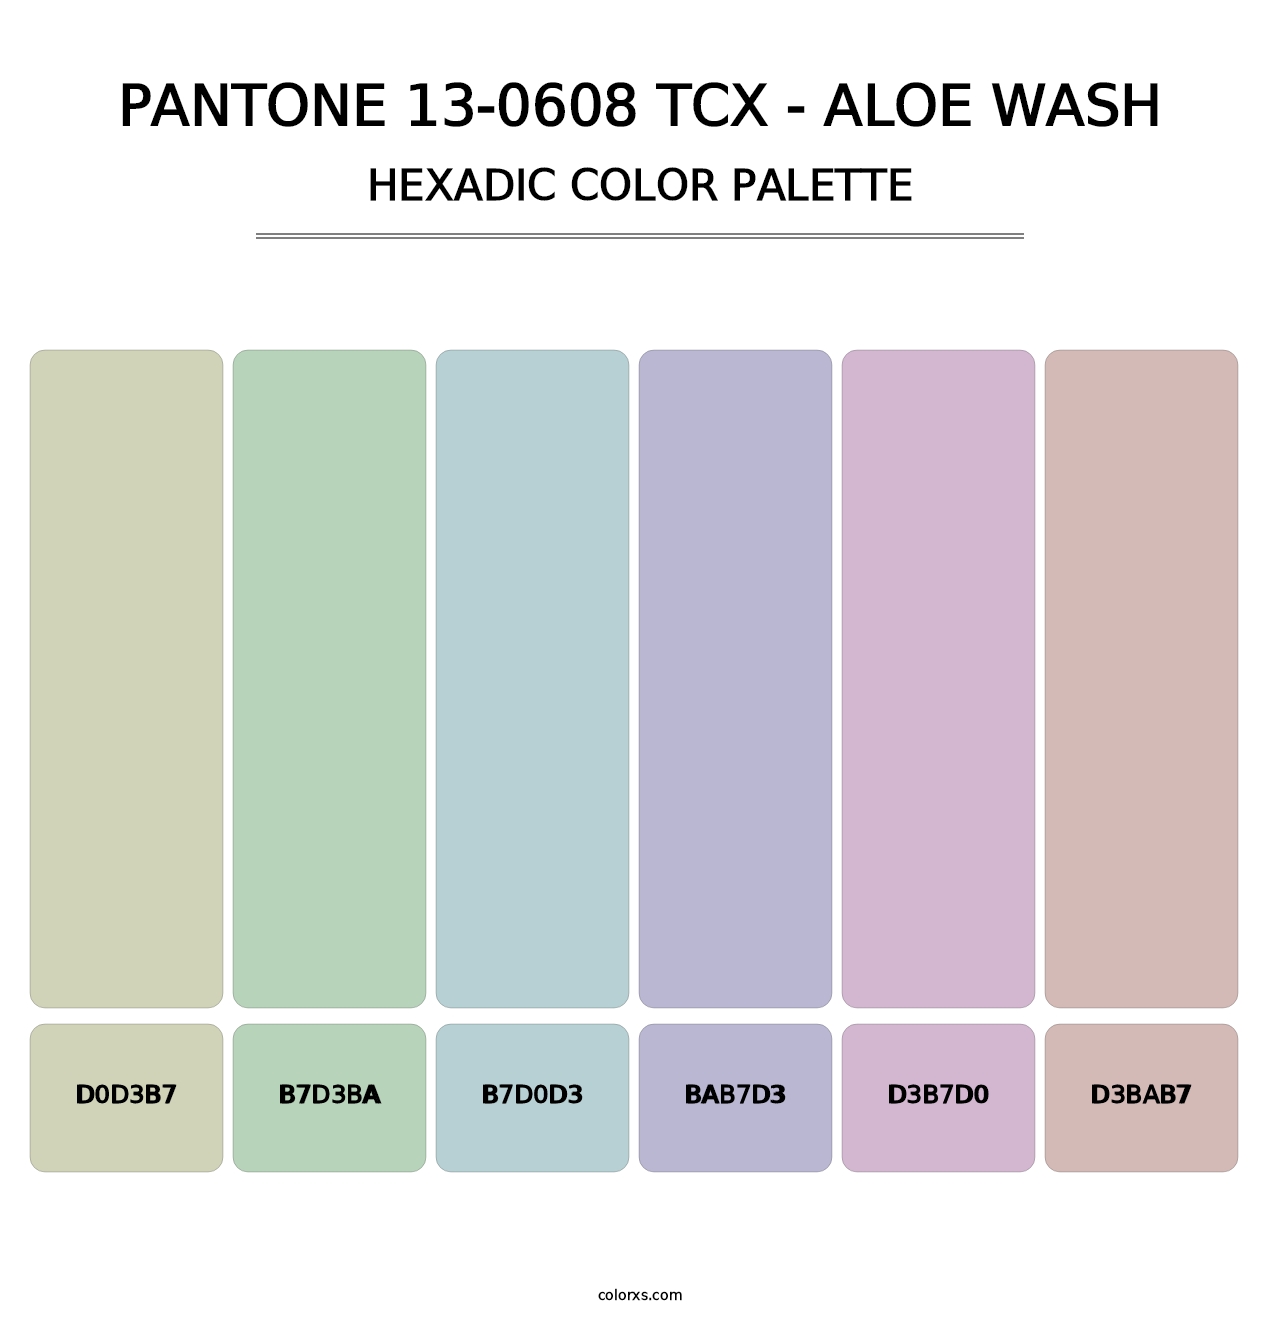 PANTONE 13-0608 TCX - Aloe Wash - Hexadic Color Palette